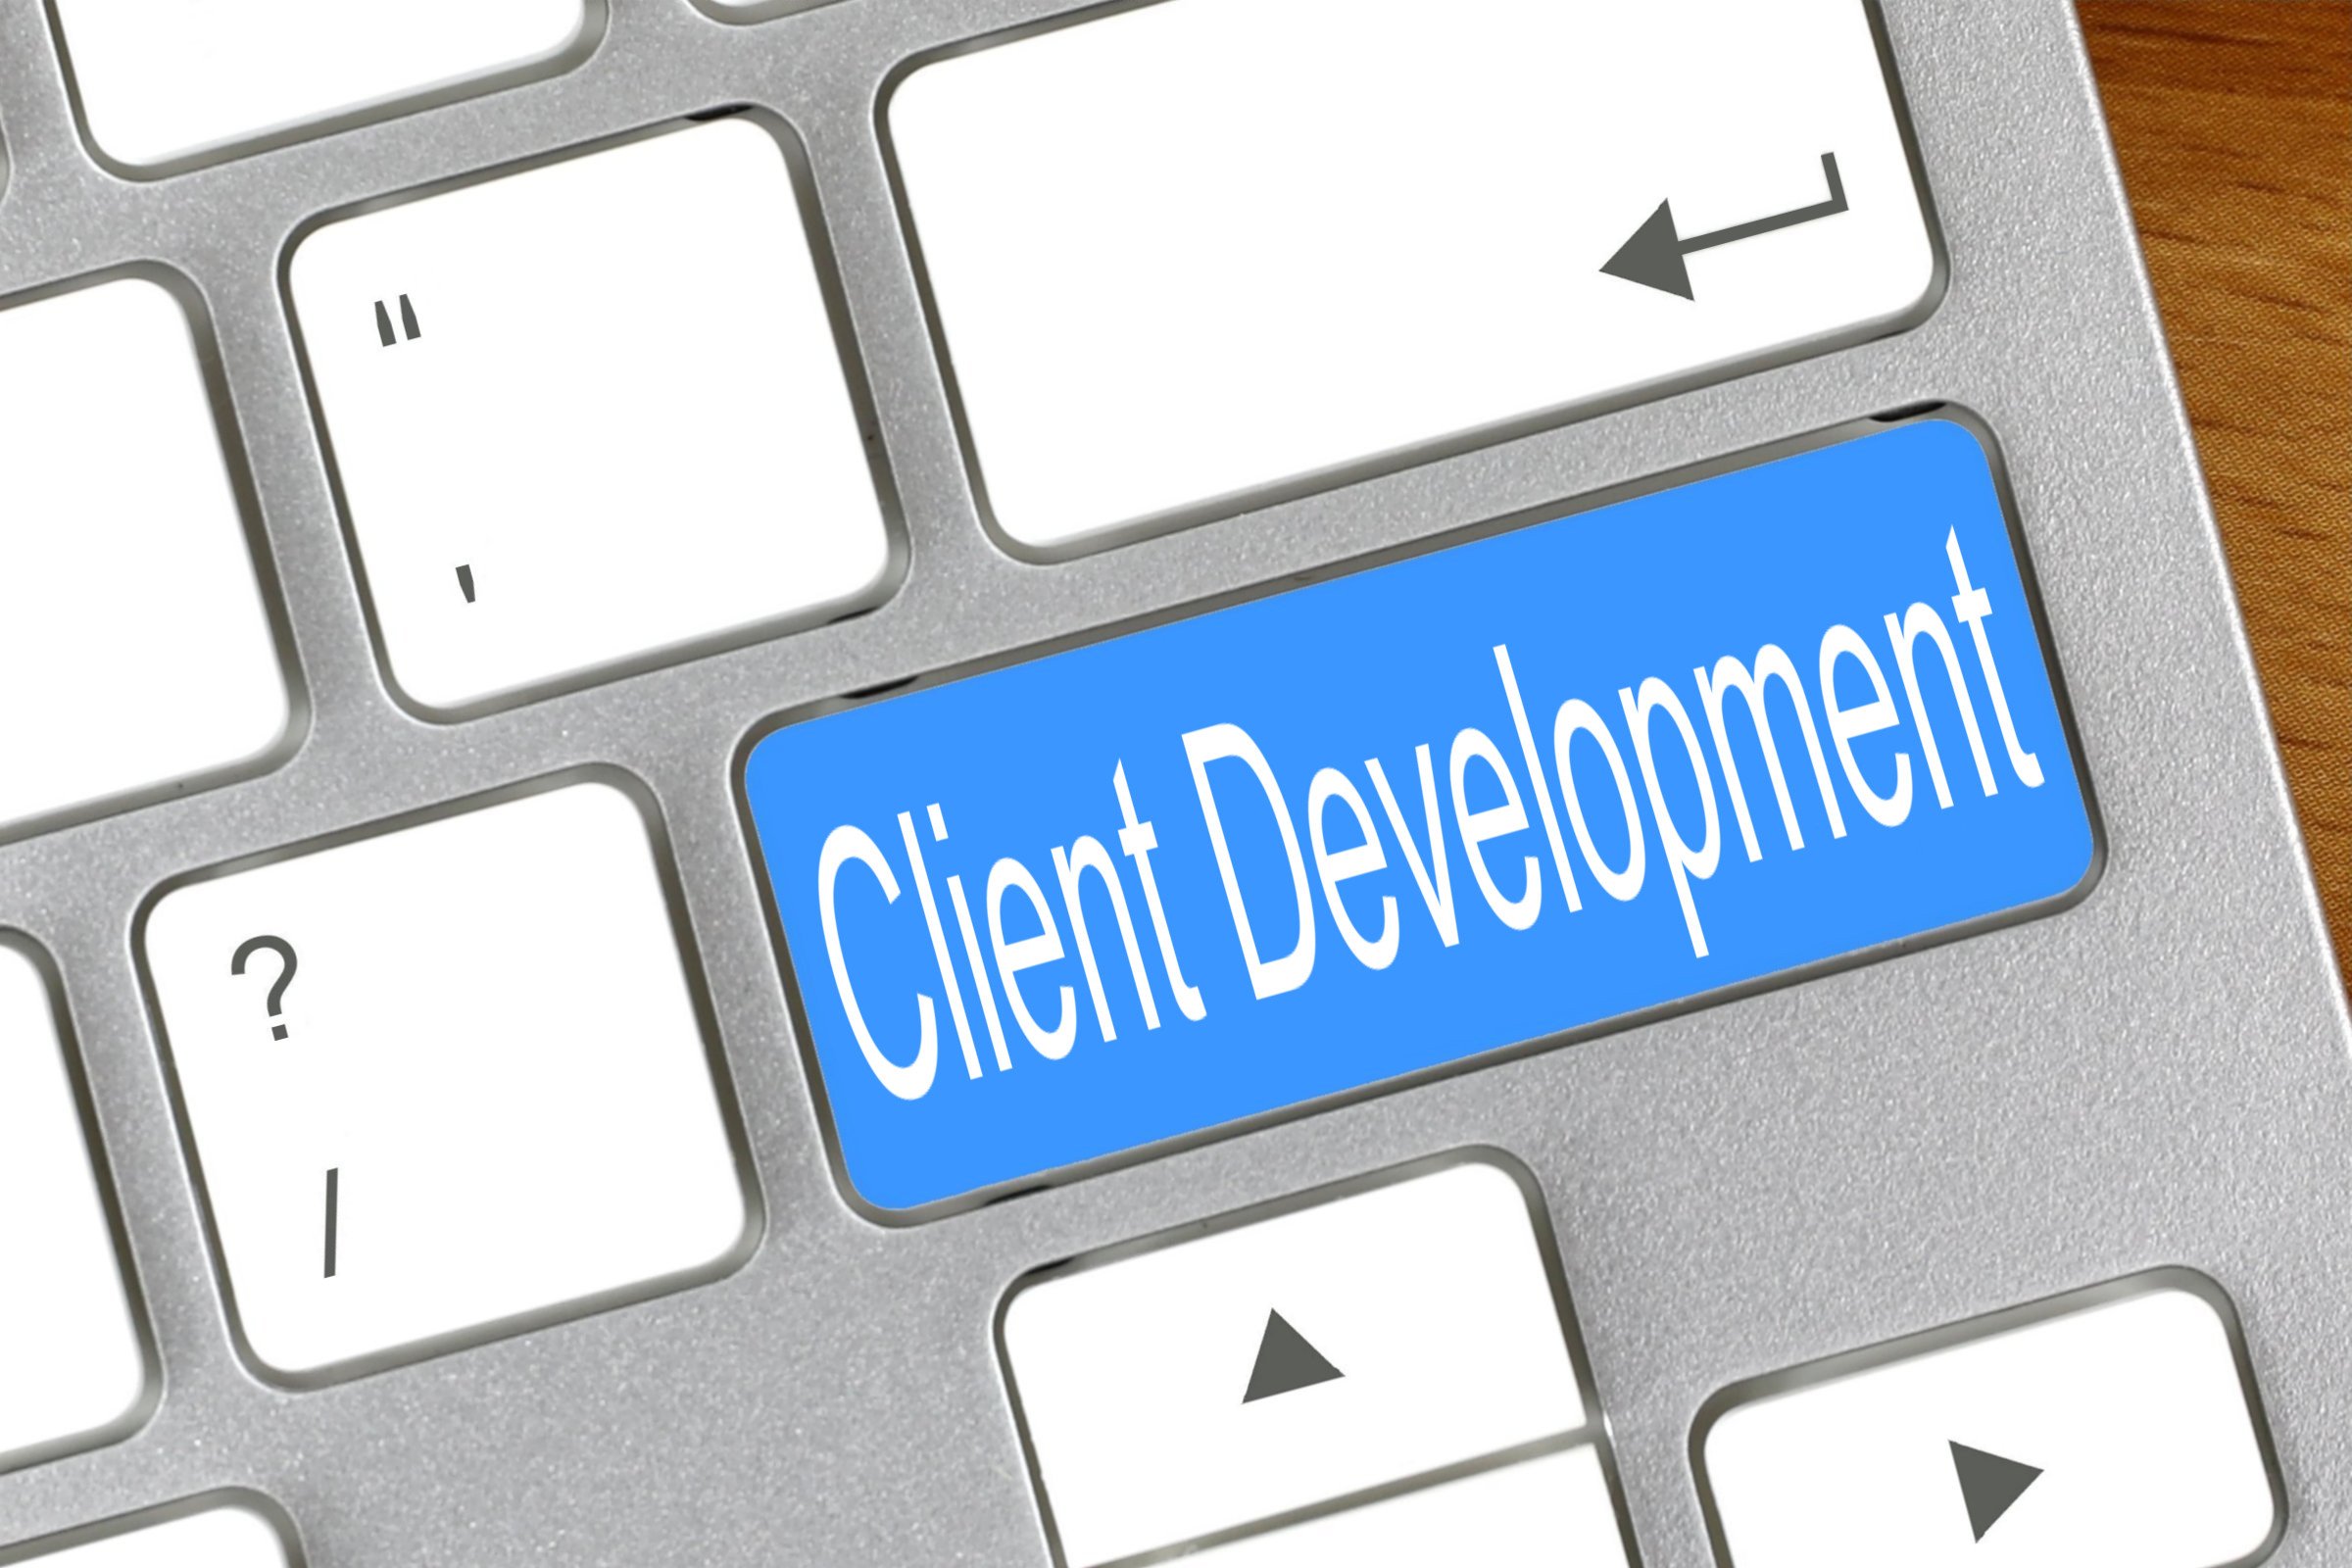 client development